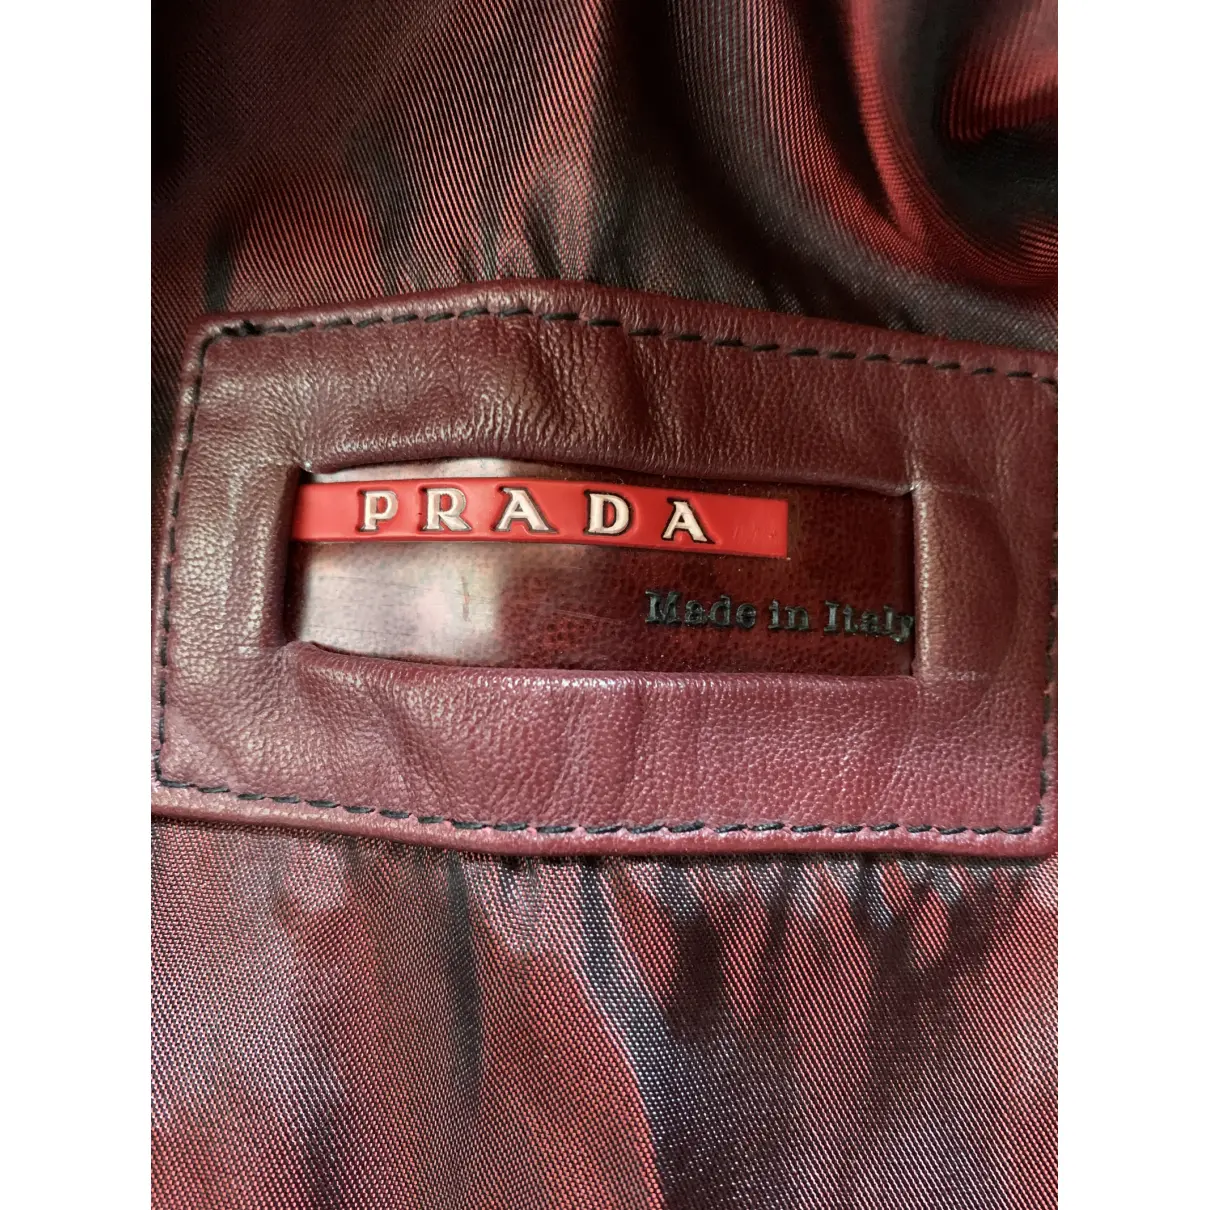 Buy Prada Leather short vest online